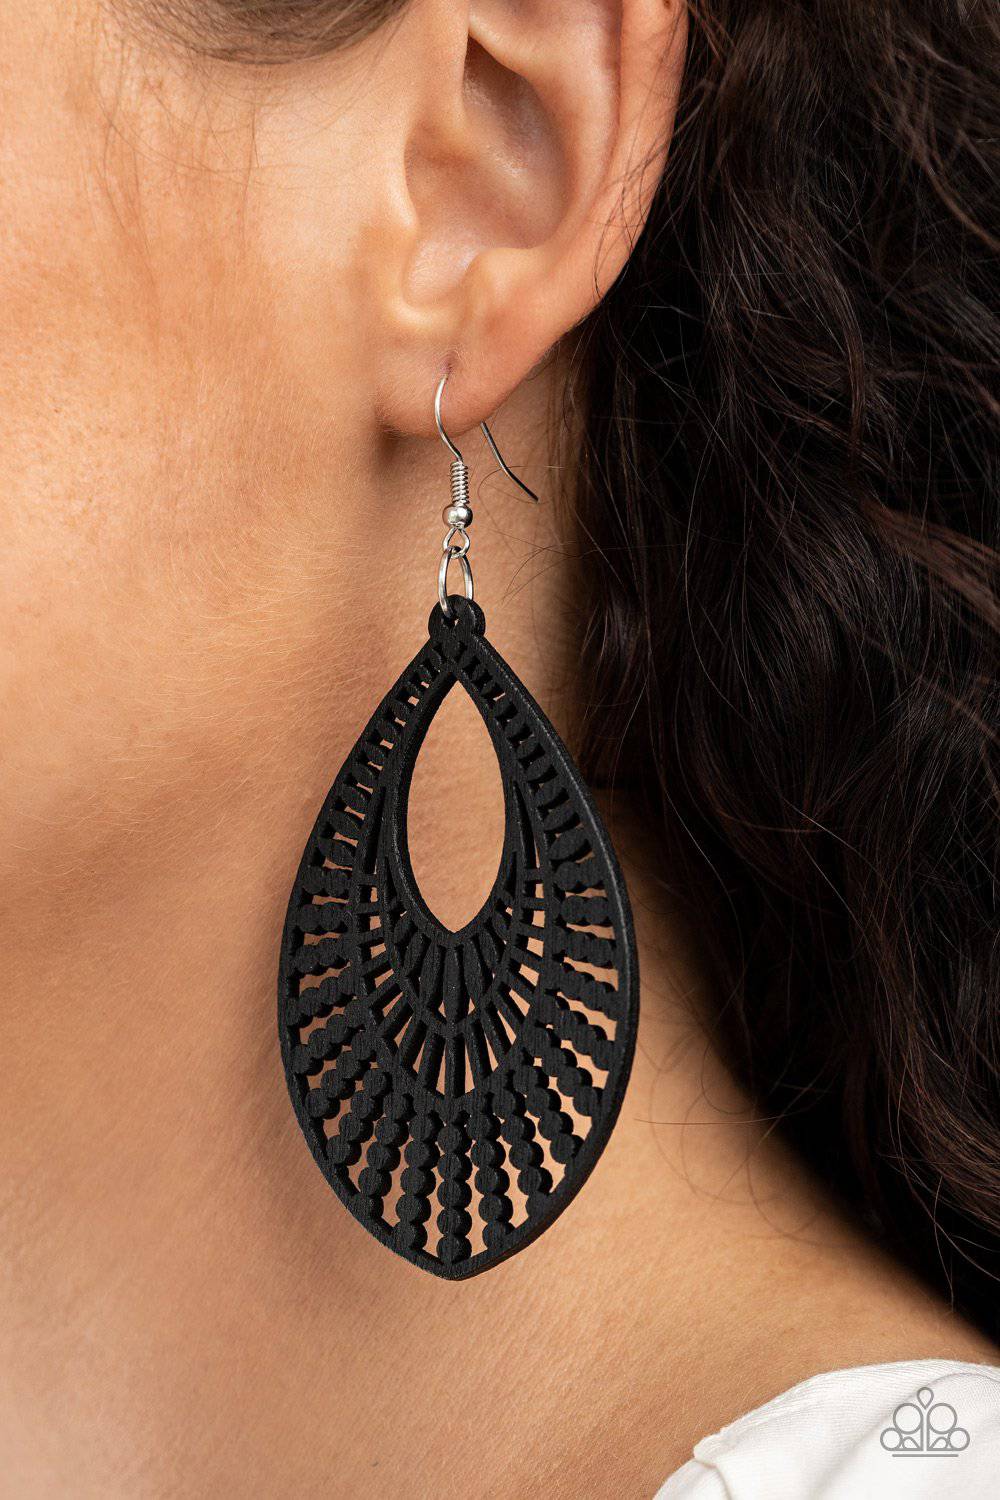 Bermuda Breeze - Black Wooden Teardrop Earrings - Paparazzi Accessories - GlaMarous Titi Jewels